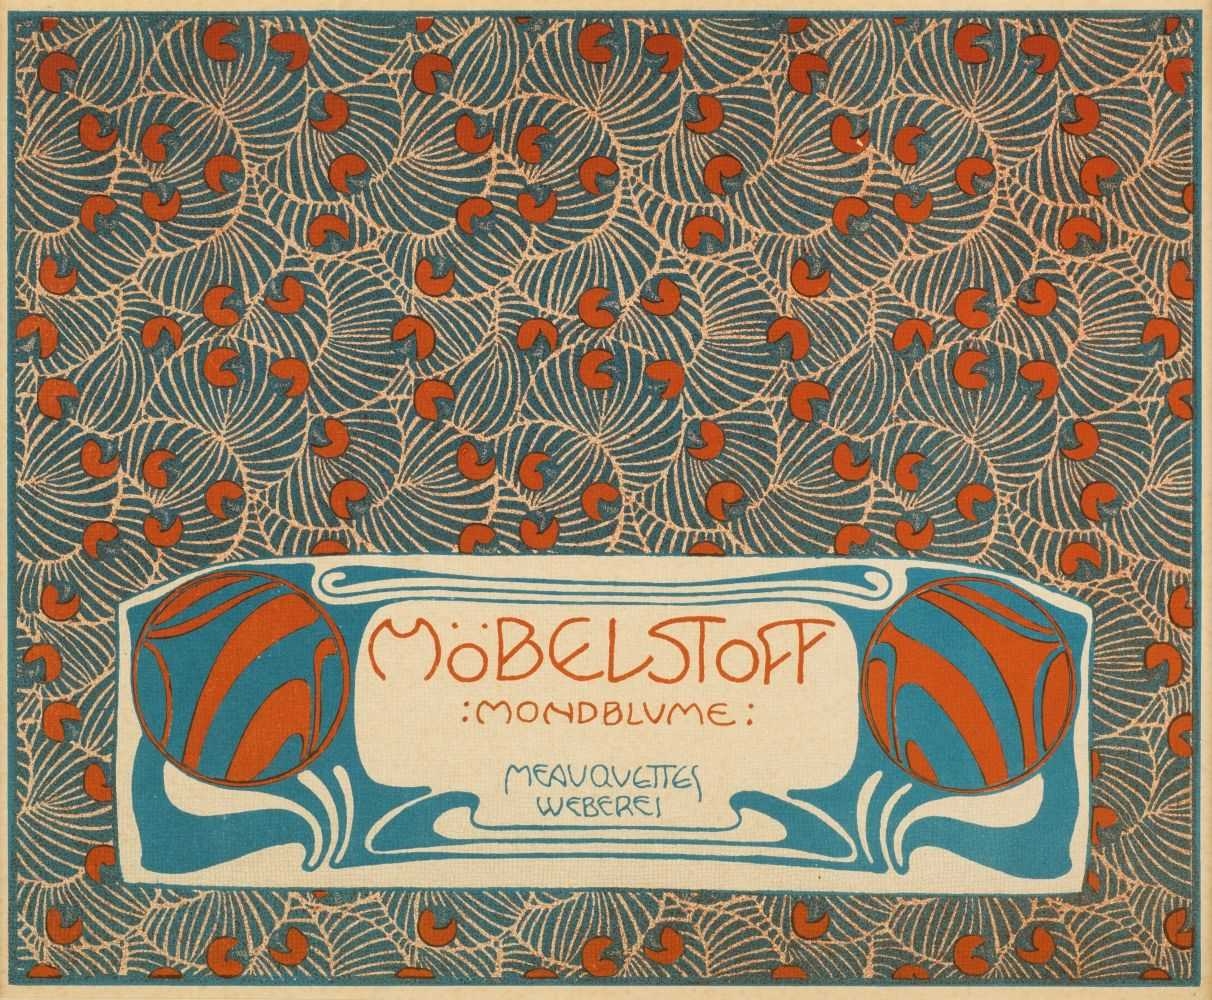 Mobelstoff Mondblume, Meauquettes Weberei by Koloman Moser, 1901